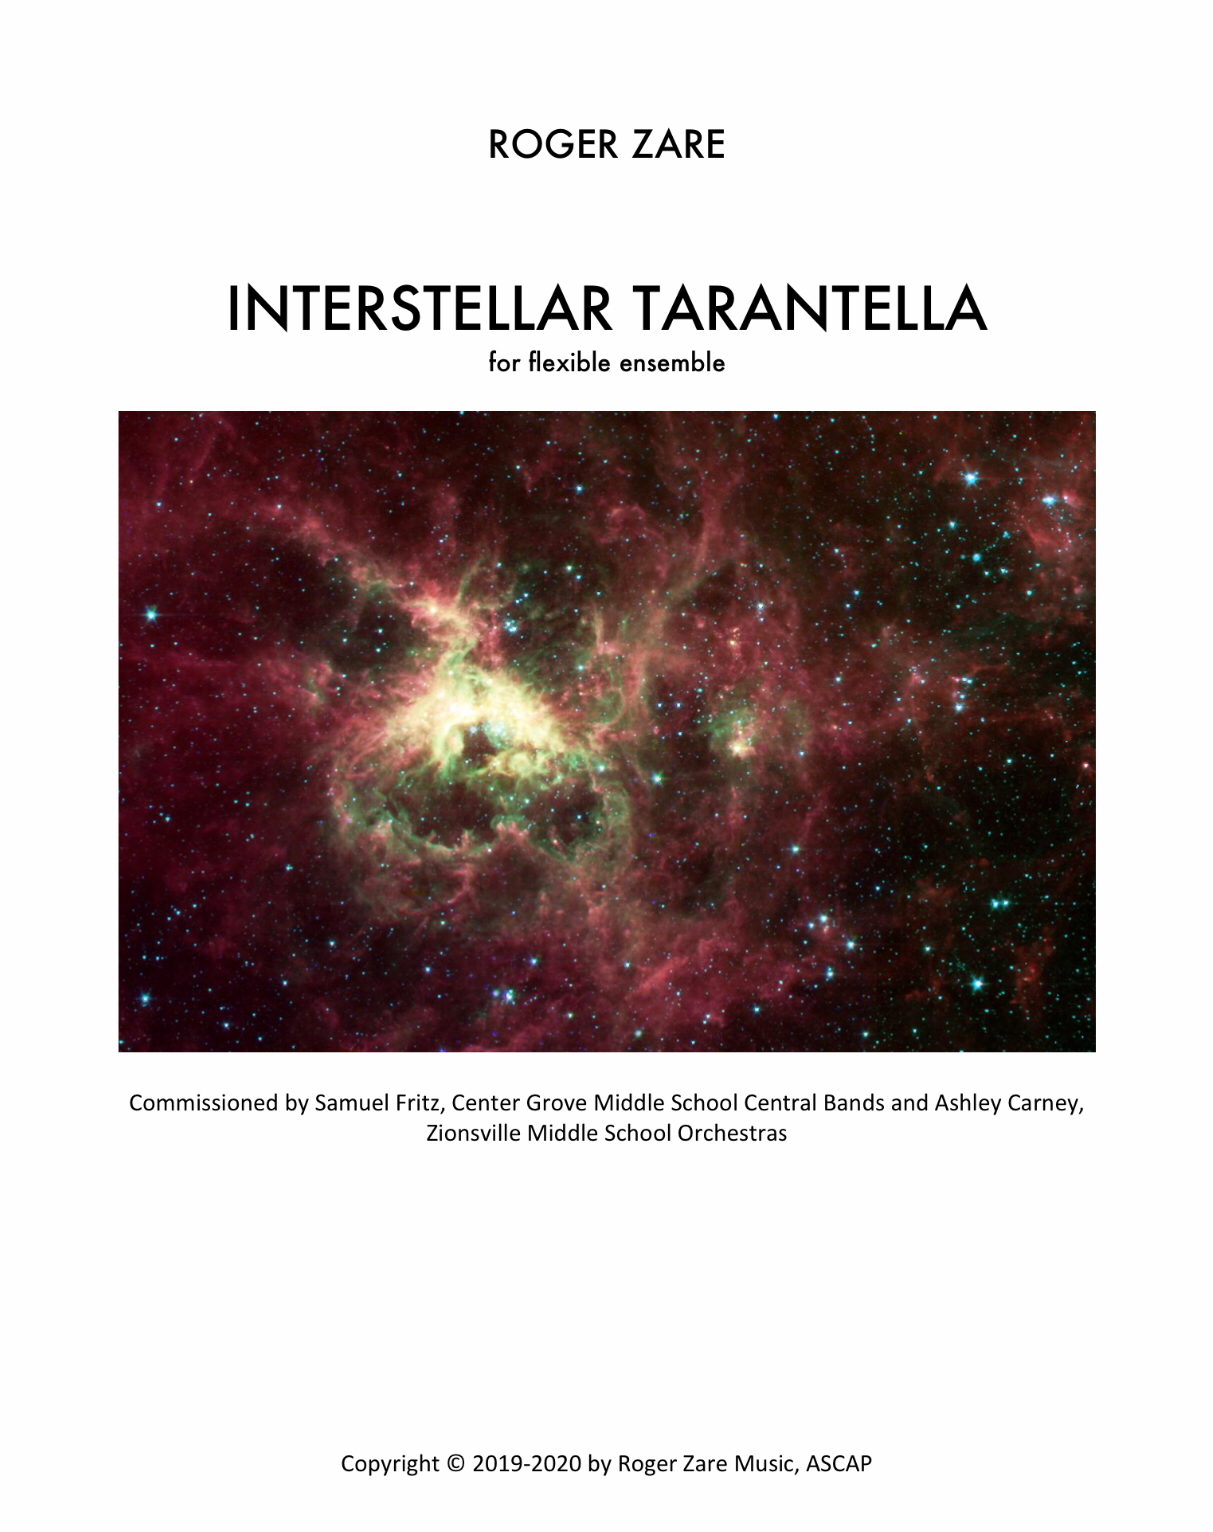 Interstellar Tarantella (Flex Version Score Only) by Roger Zare